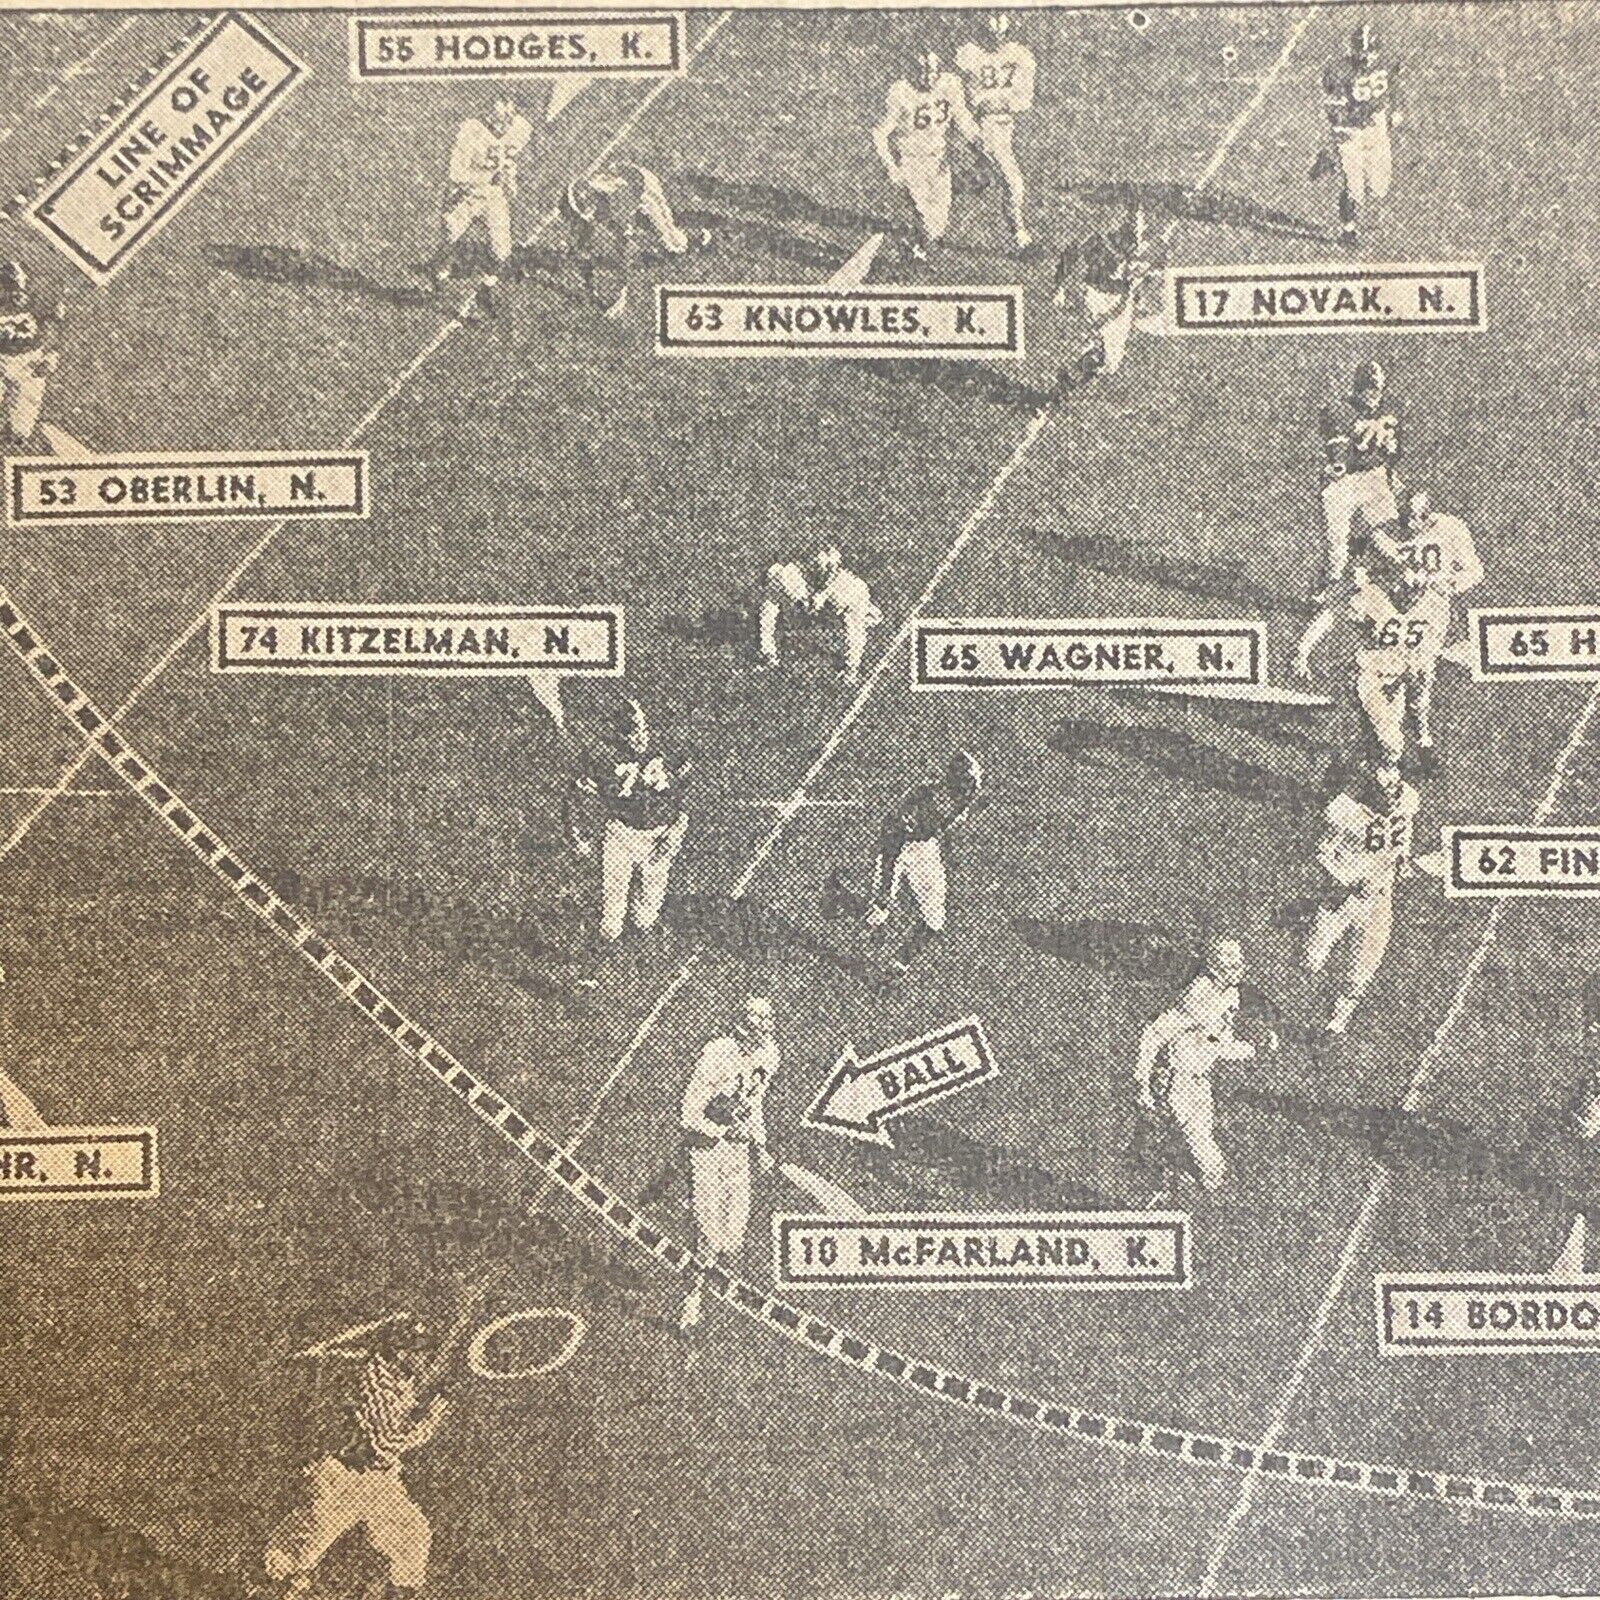 1953 Kansas & Nebraska University Football Game Photo Newspaper Clipping